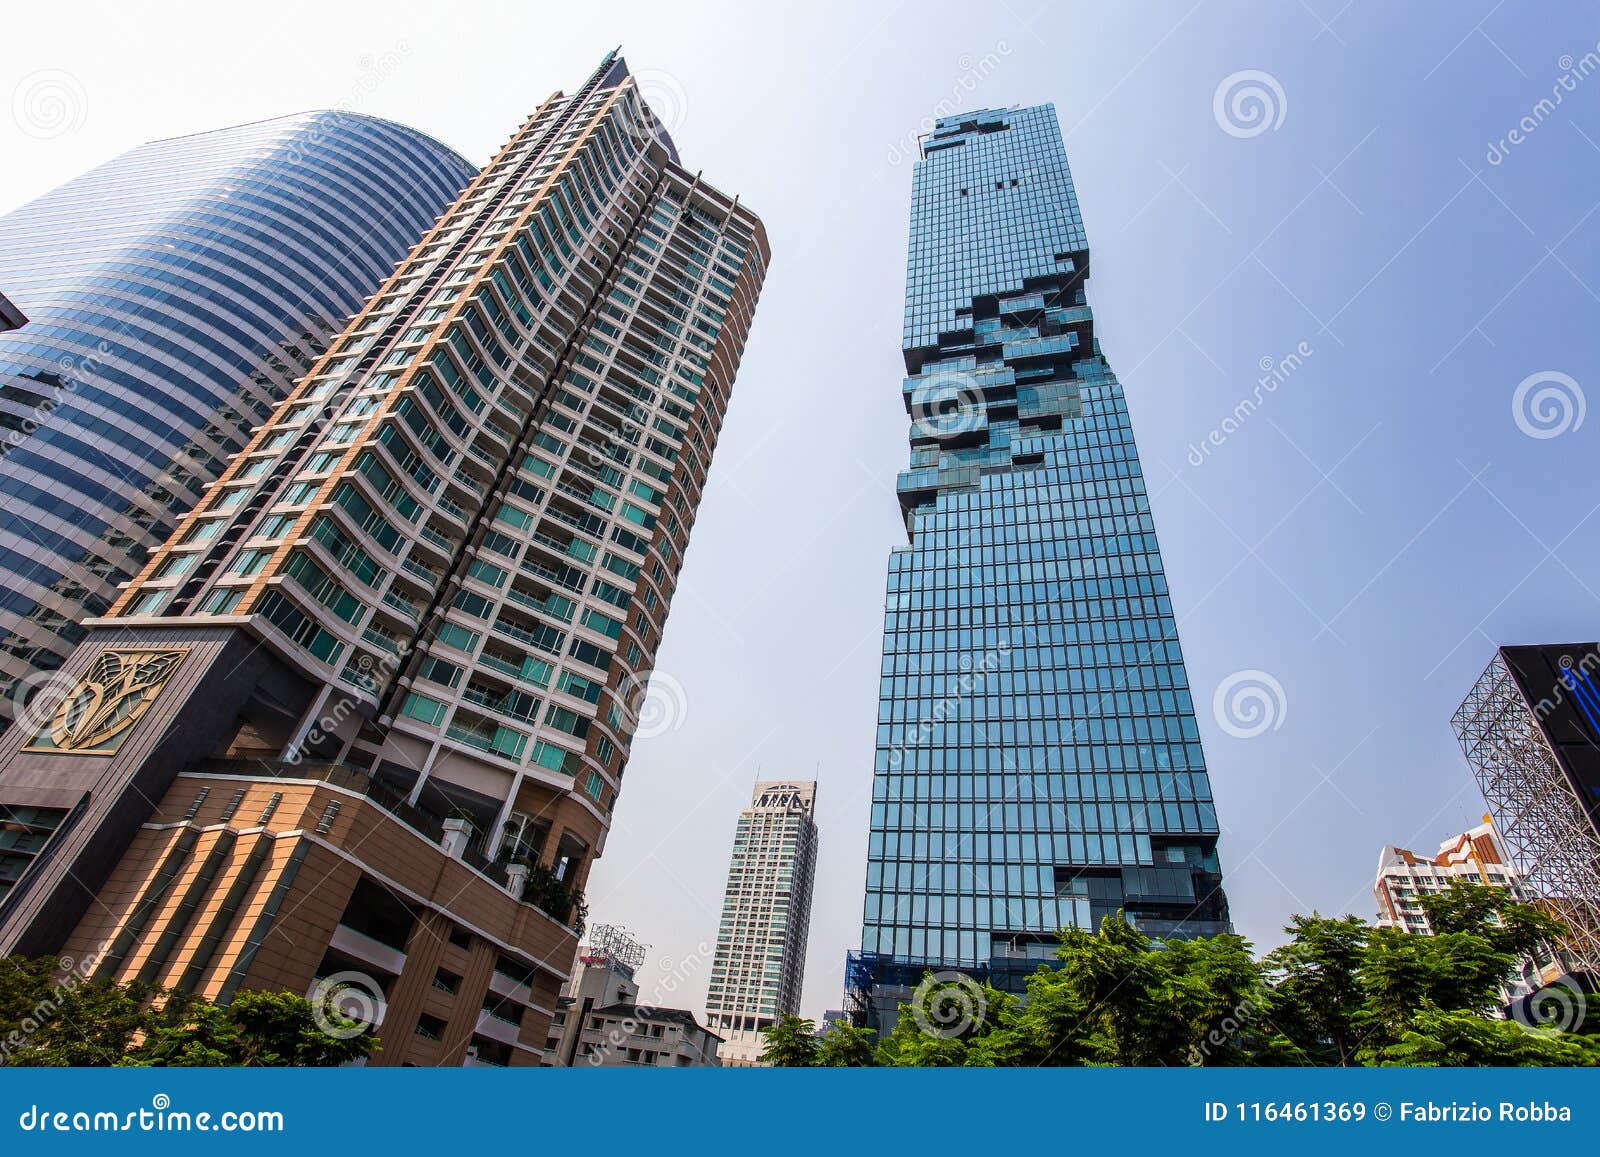 mahanakhon-building-bangkok-thailand-tallest-building-thailand-mt-mahanakhon-building-bangkok-thailand-asia-116461369.jpg